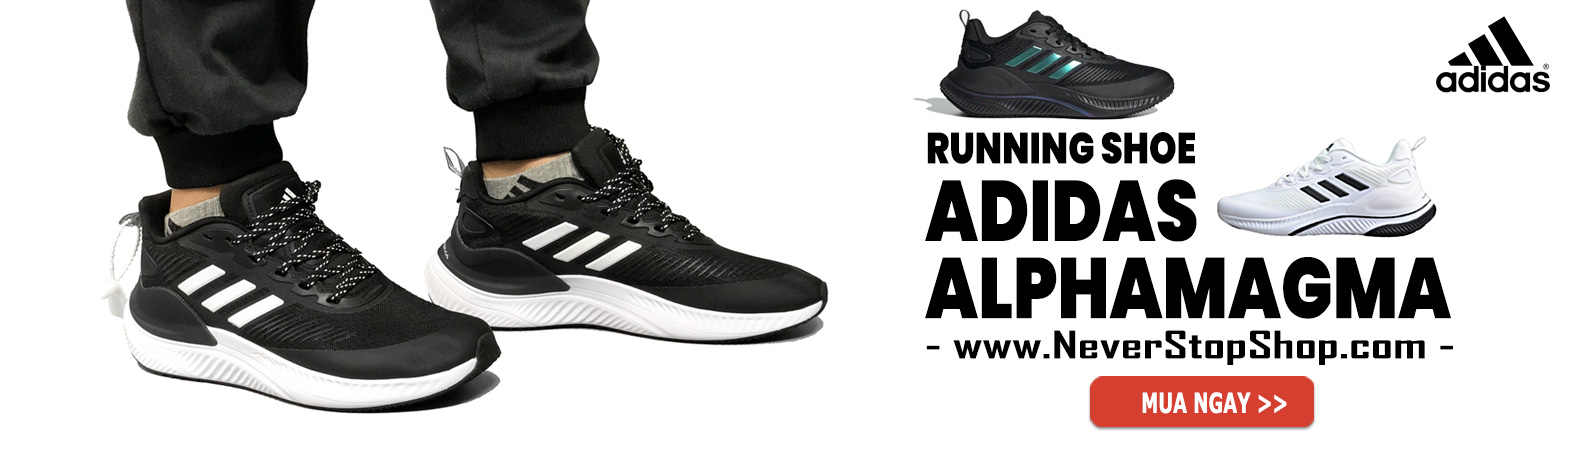 Giày chạy bộ Adidas AlphaMagma | NeverStopShop.com